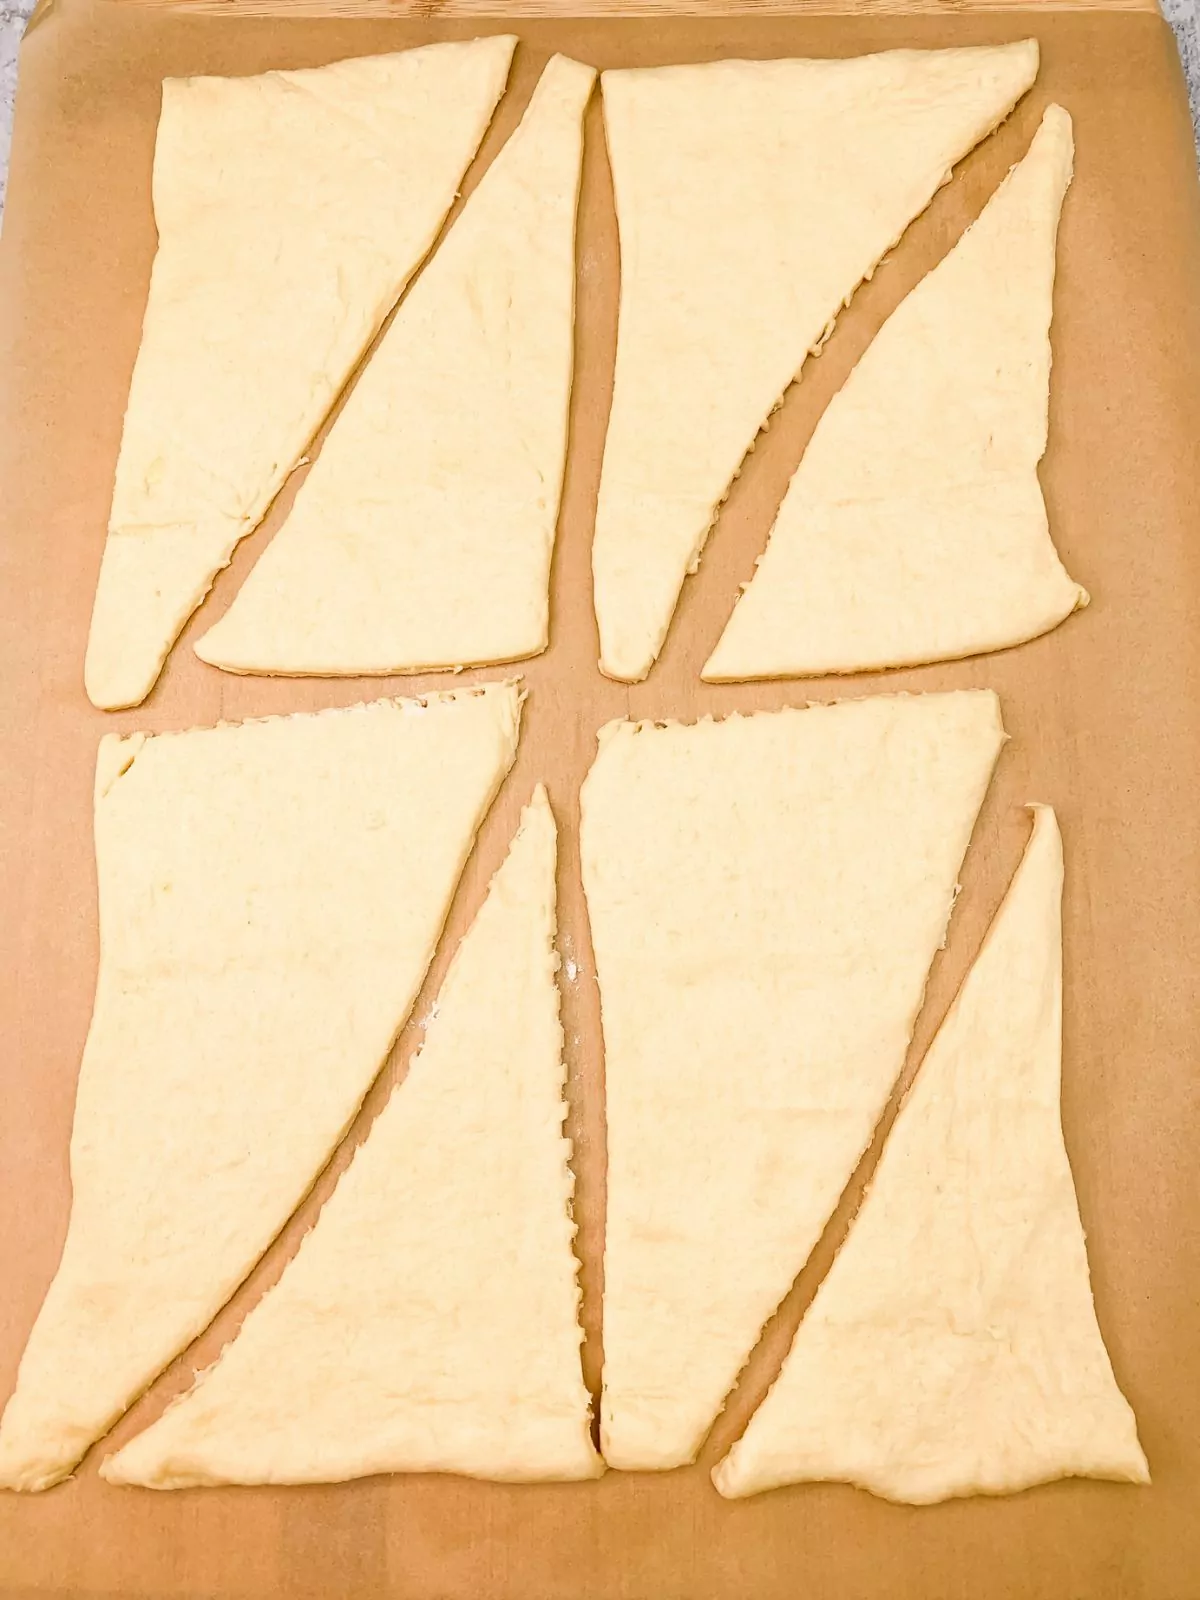 crescent rolls laid out on parchment paper.